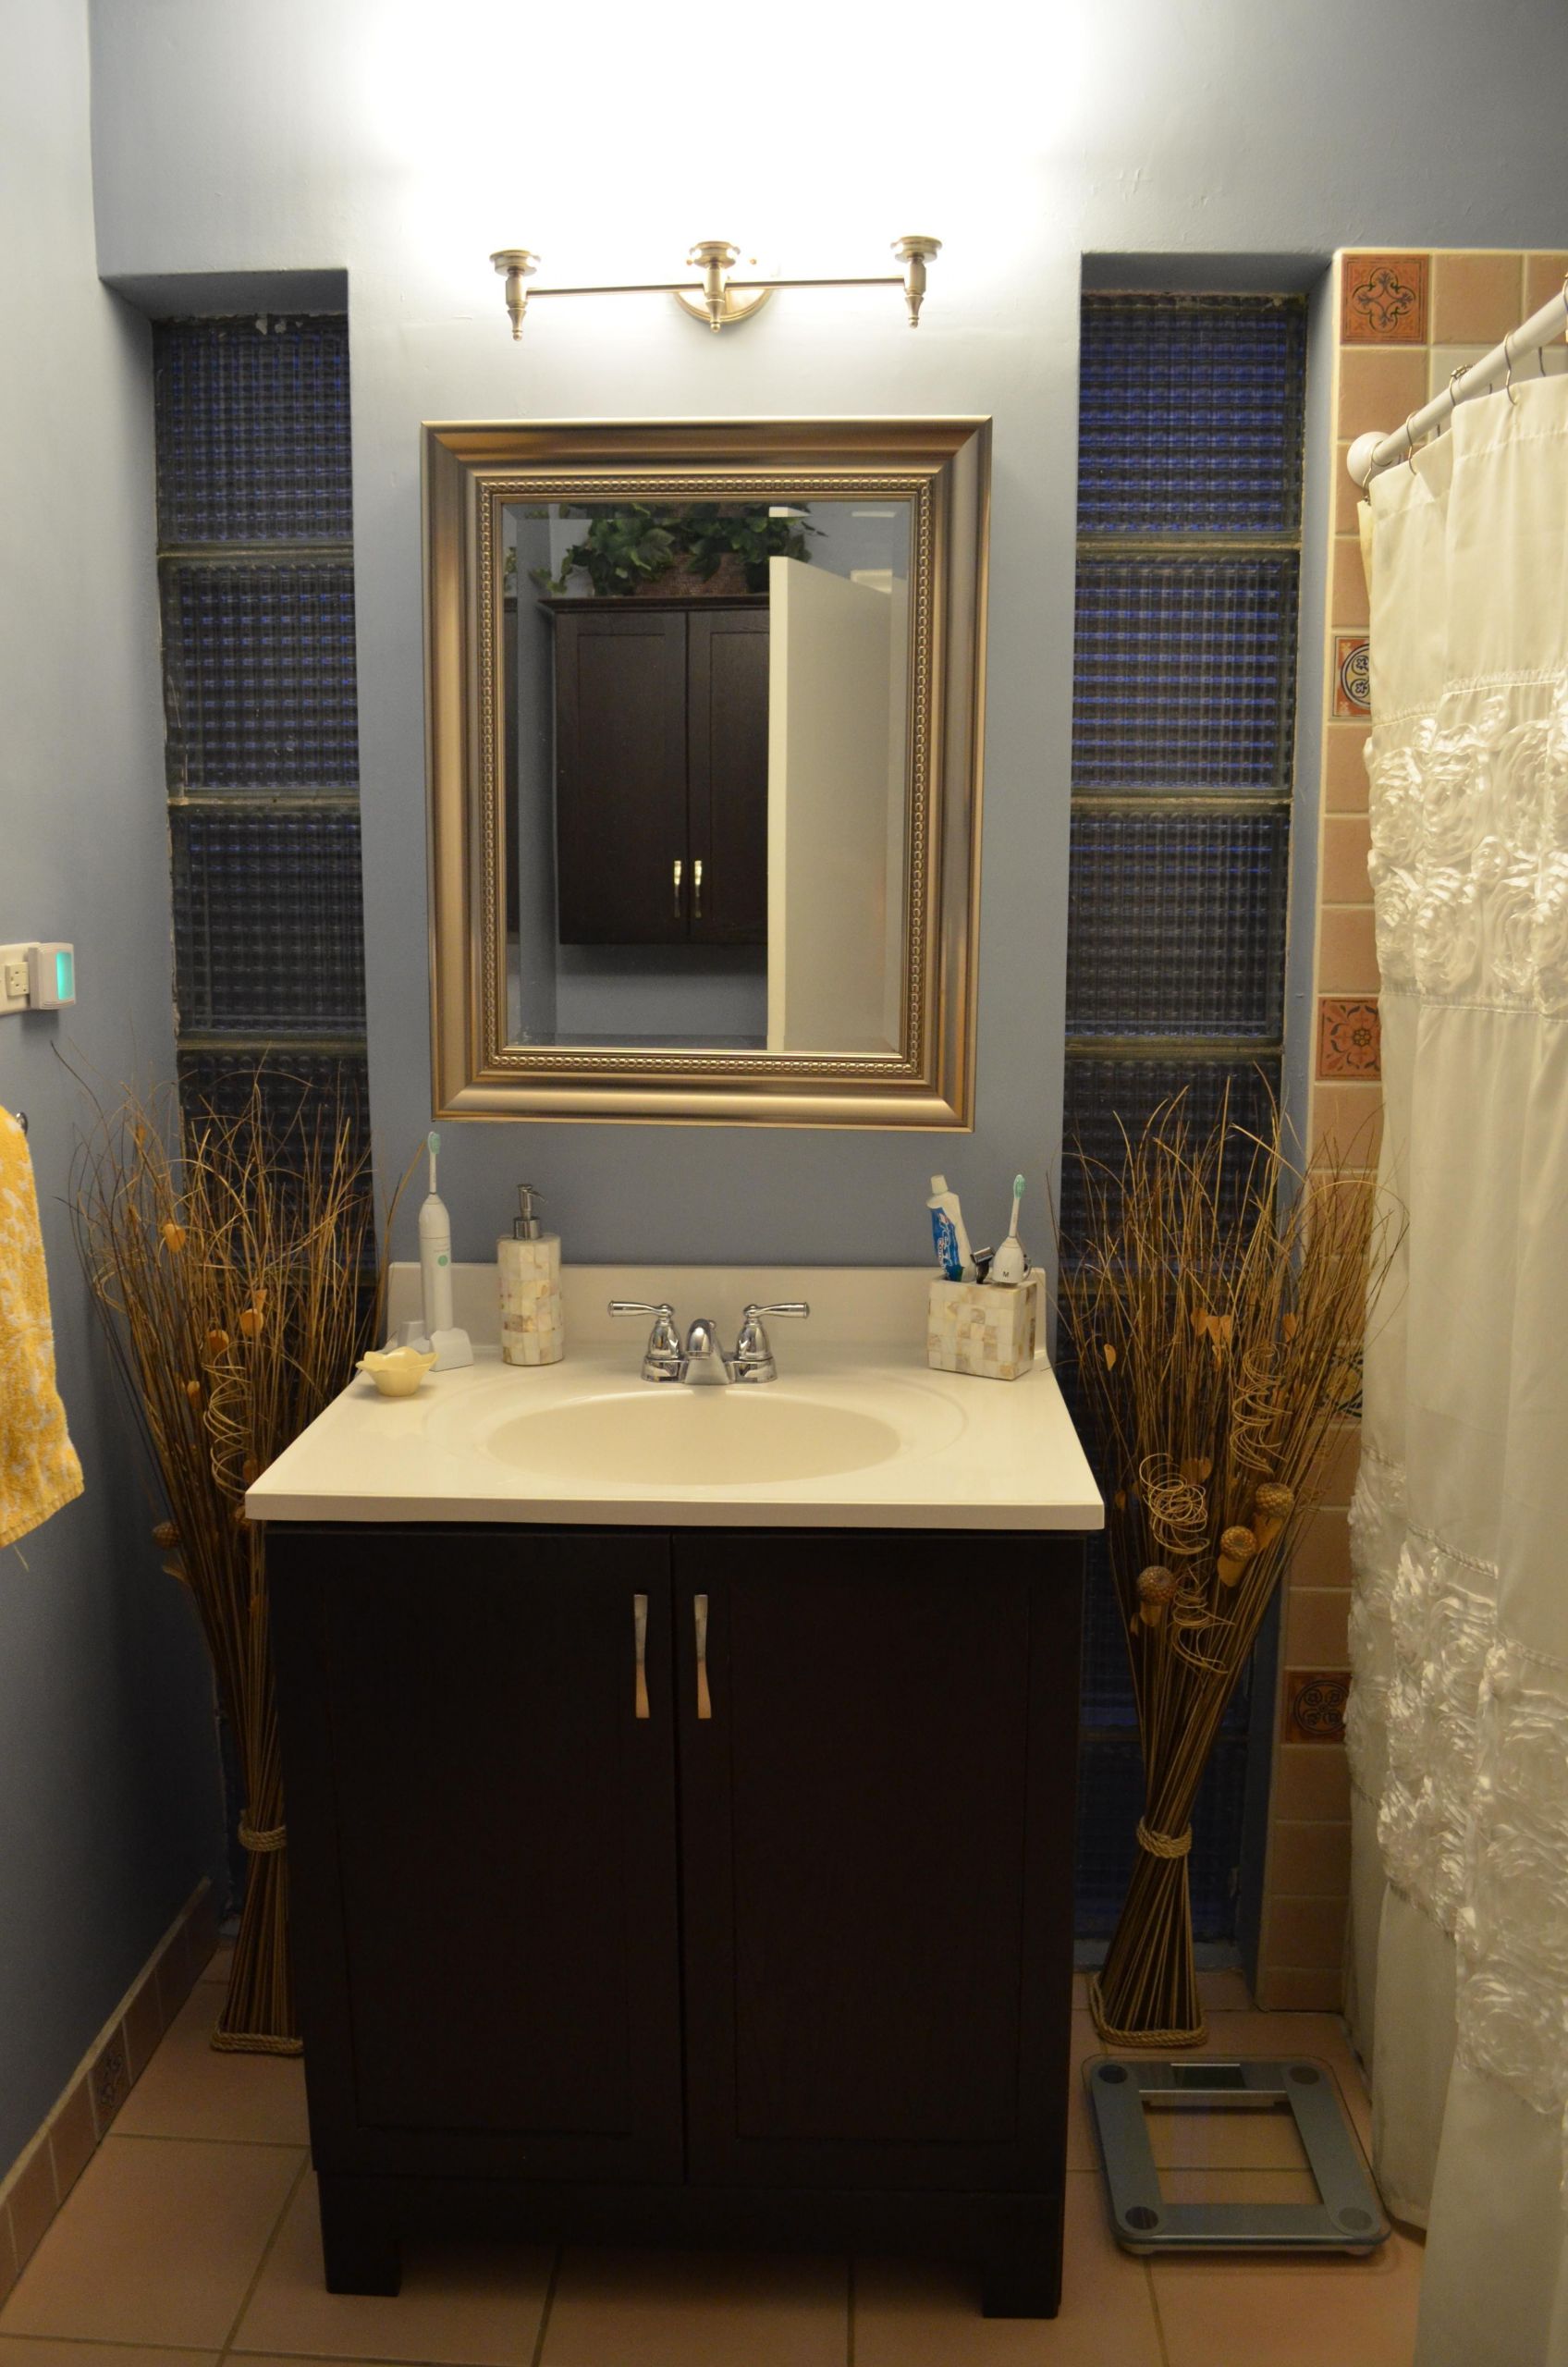 Narrow Bathroom Mirror
 20 Ideas of Small Bathroom Vanity Mirrors